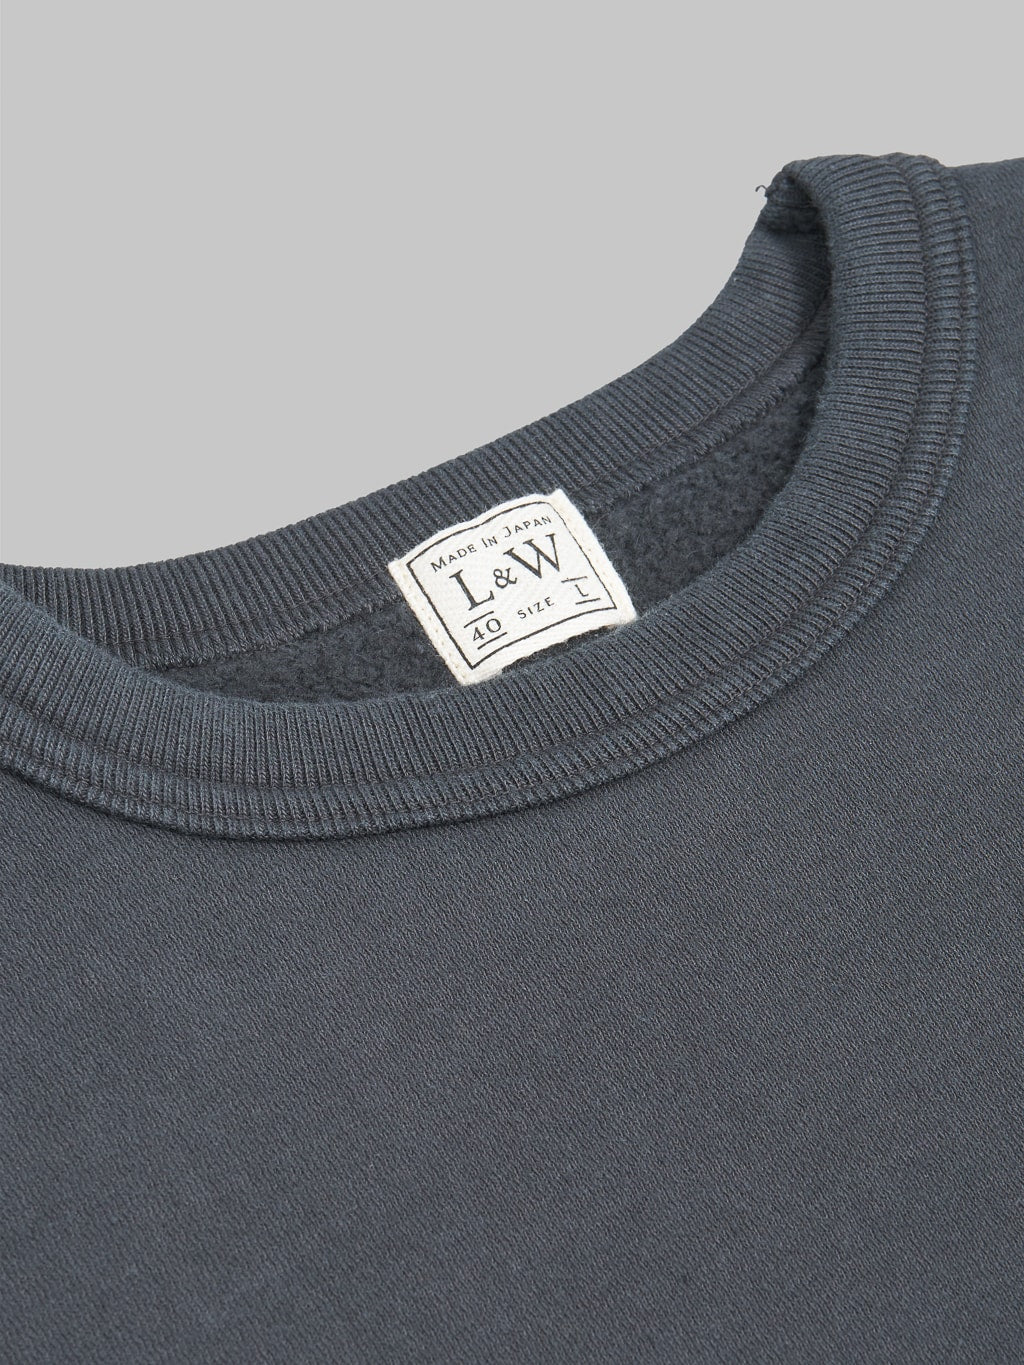 Loop Weft Vintage Pinborder Knit Crewneck Sweatshirt Antique Black  collar stitching